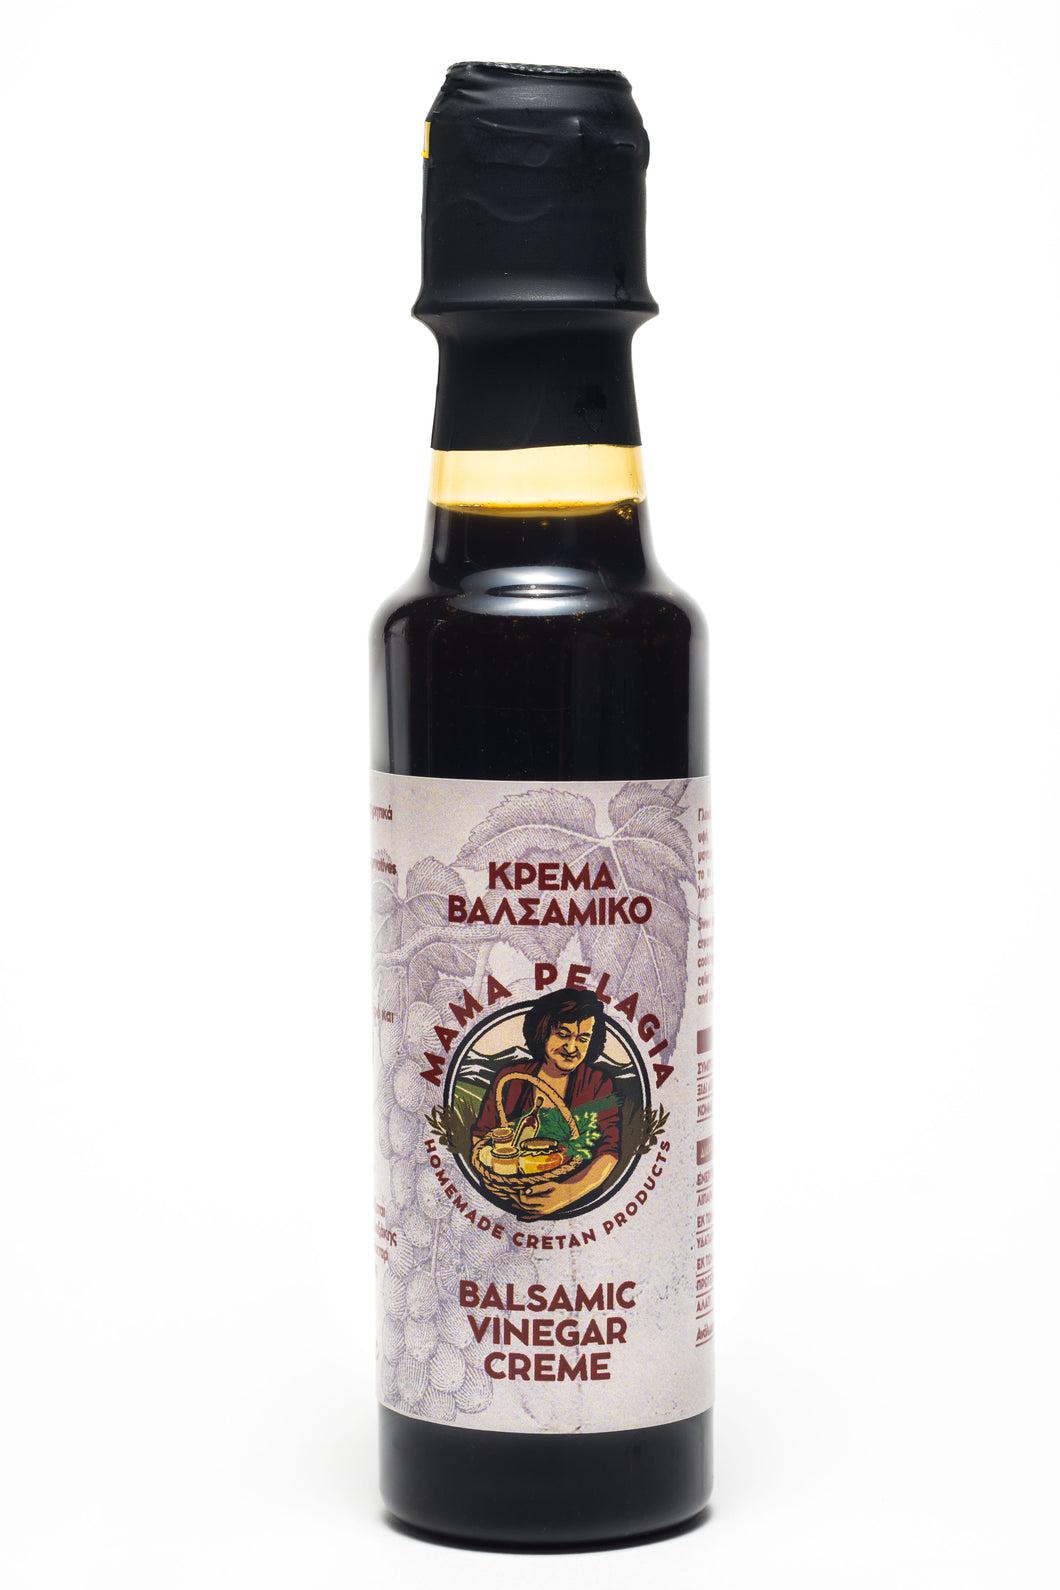 Balsamic vinegar creme 200ml